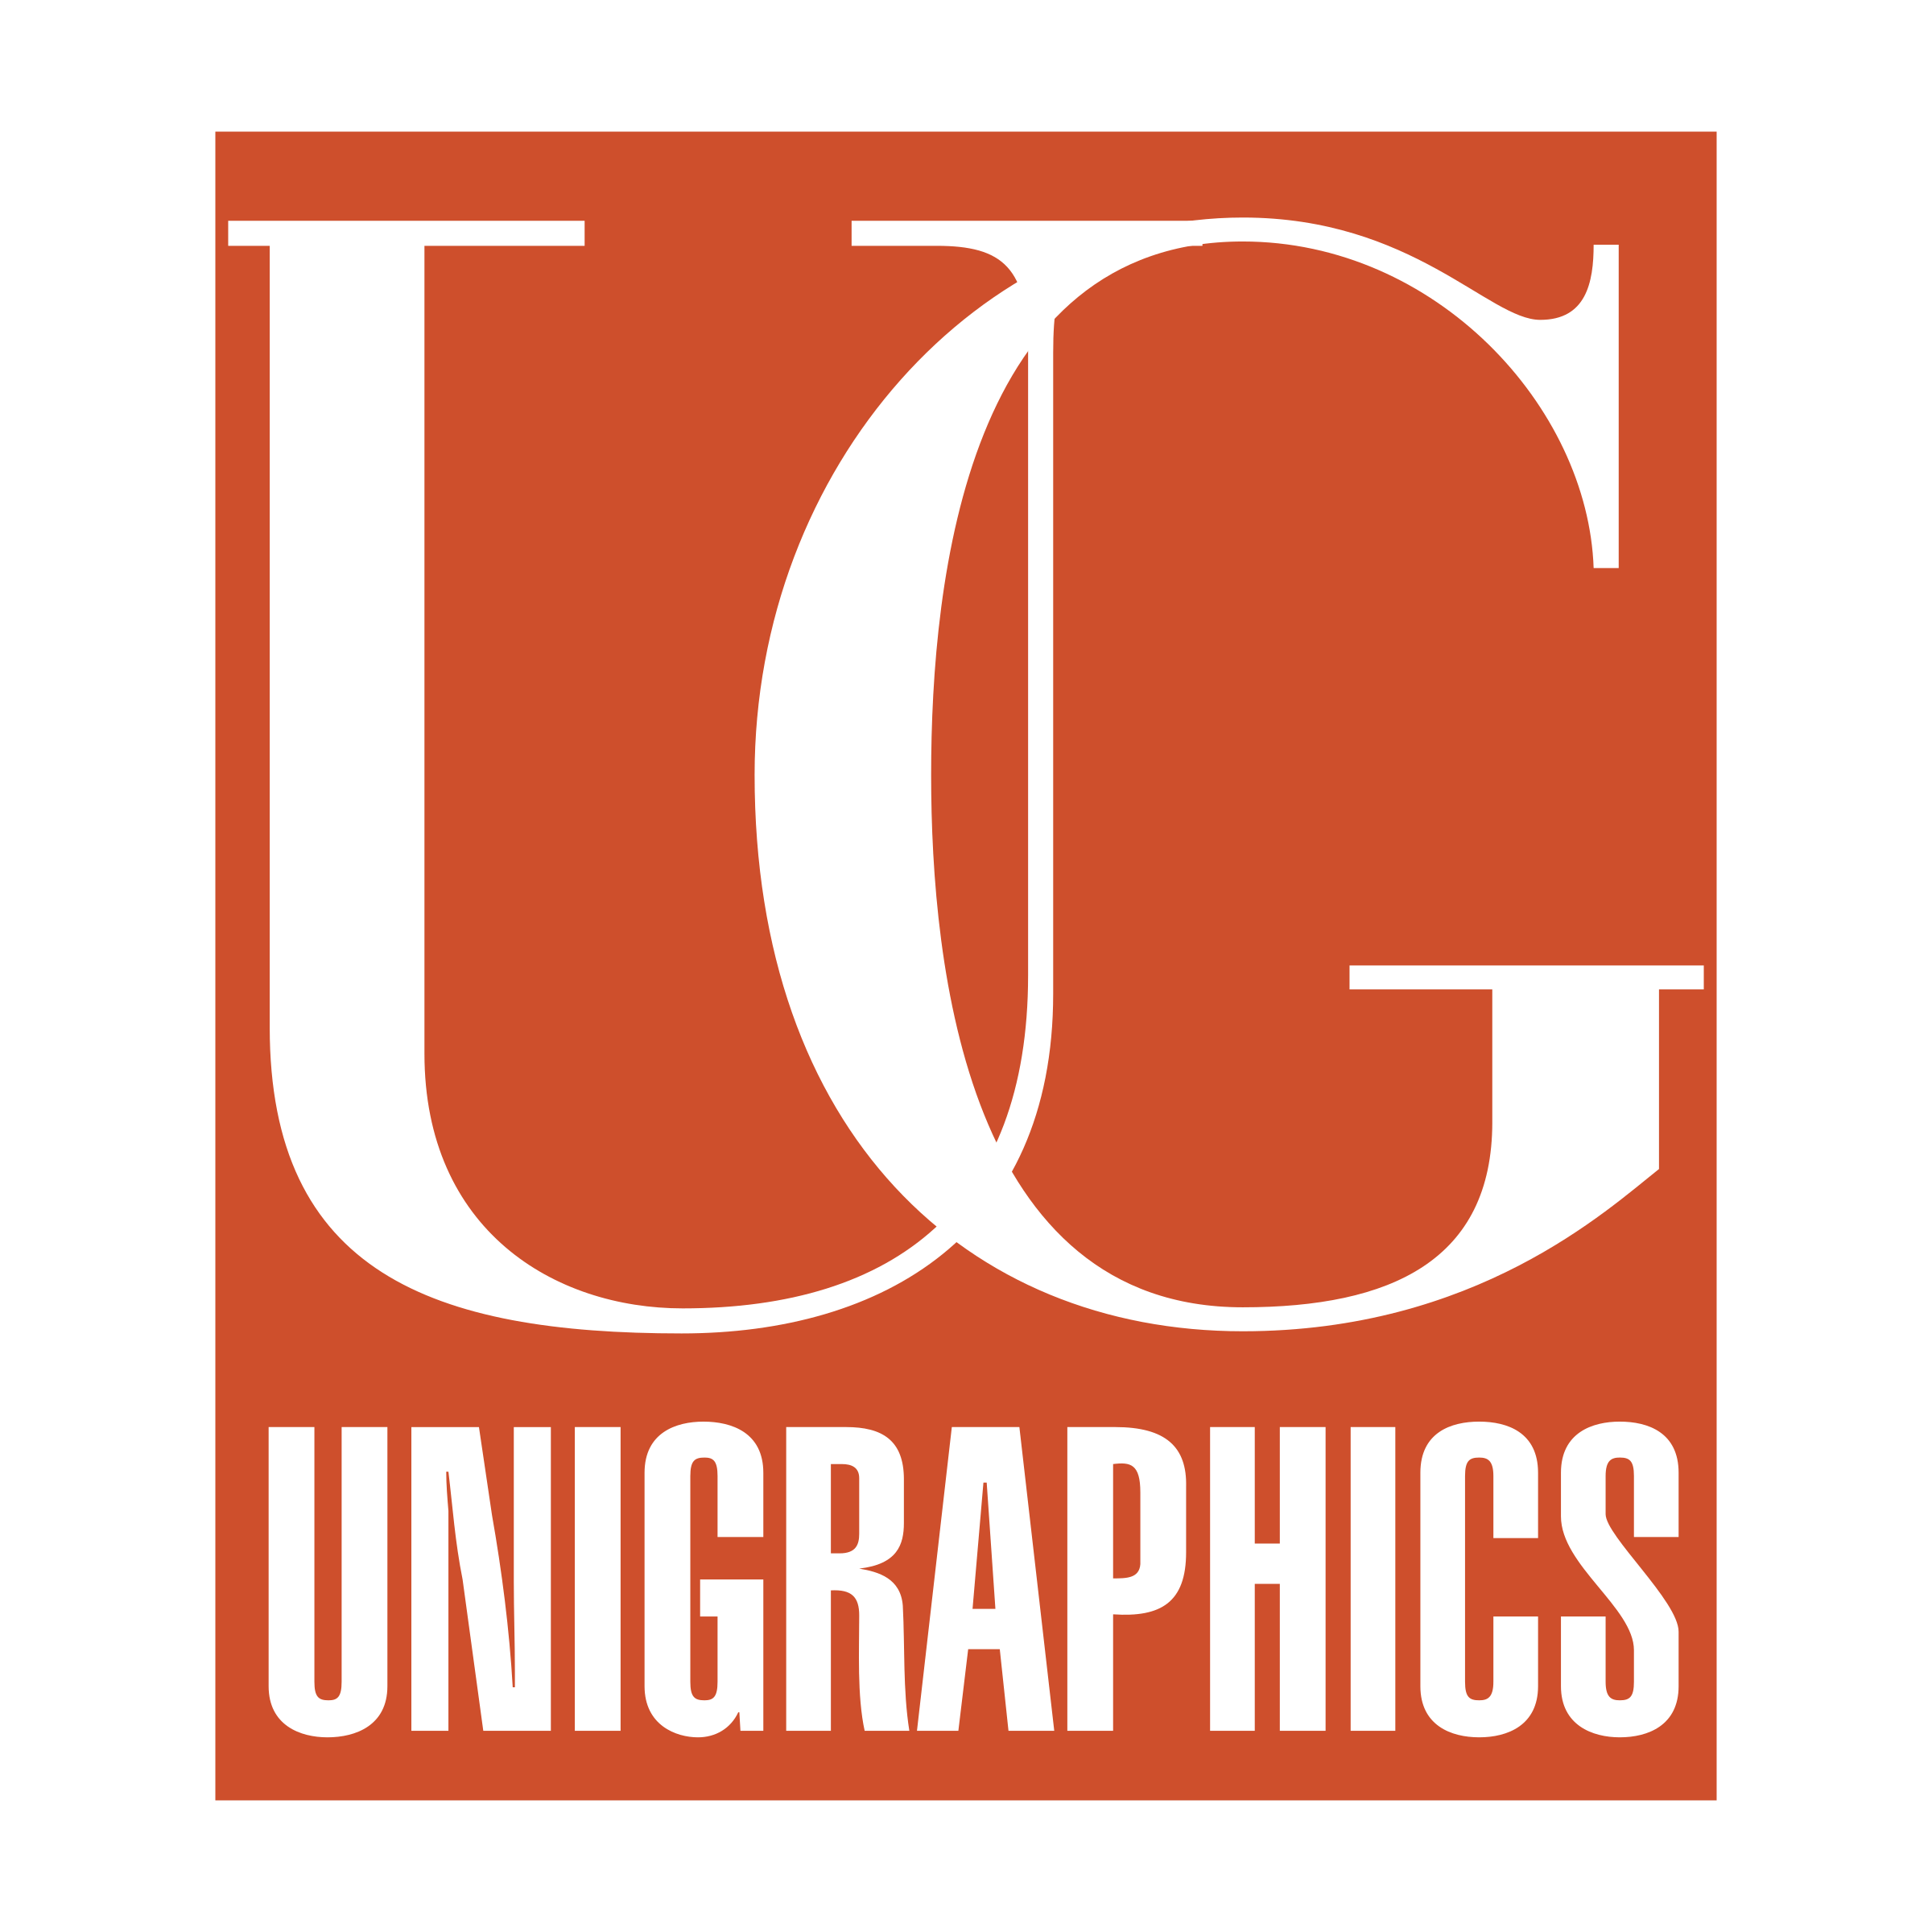 Unigraphics Logo - Unigraphics Solutions Logo PNG Transparent & SVG Vector - Freebie Supply